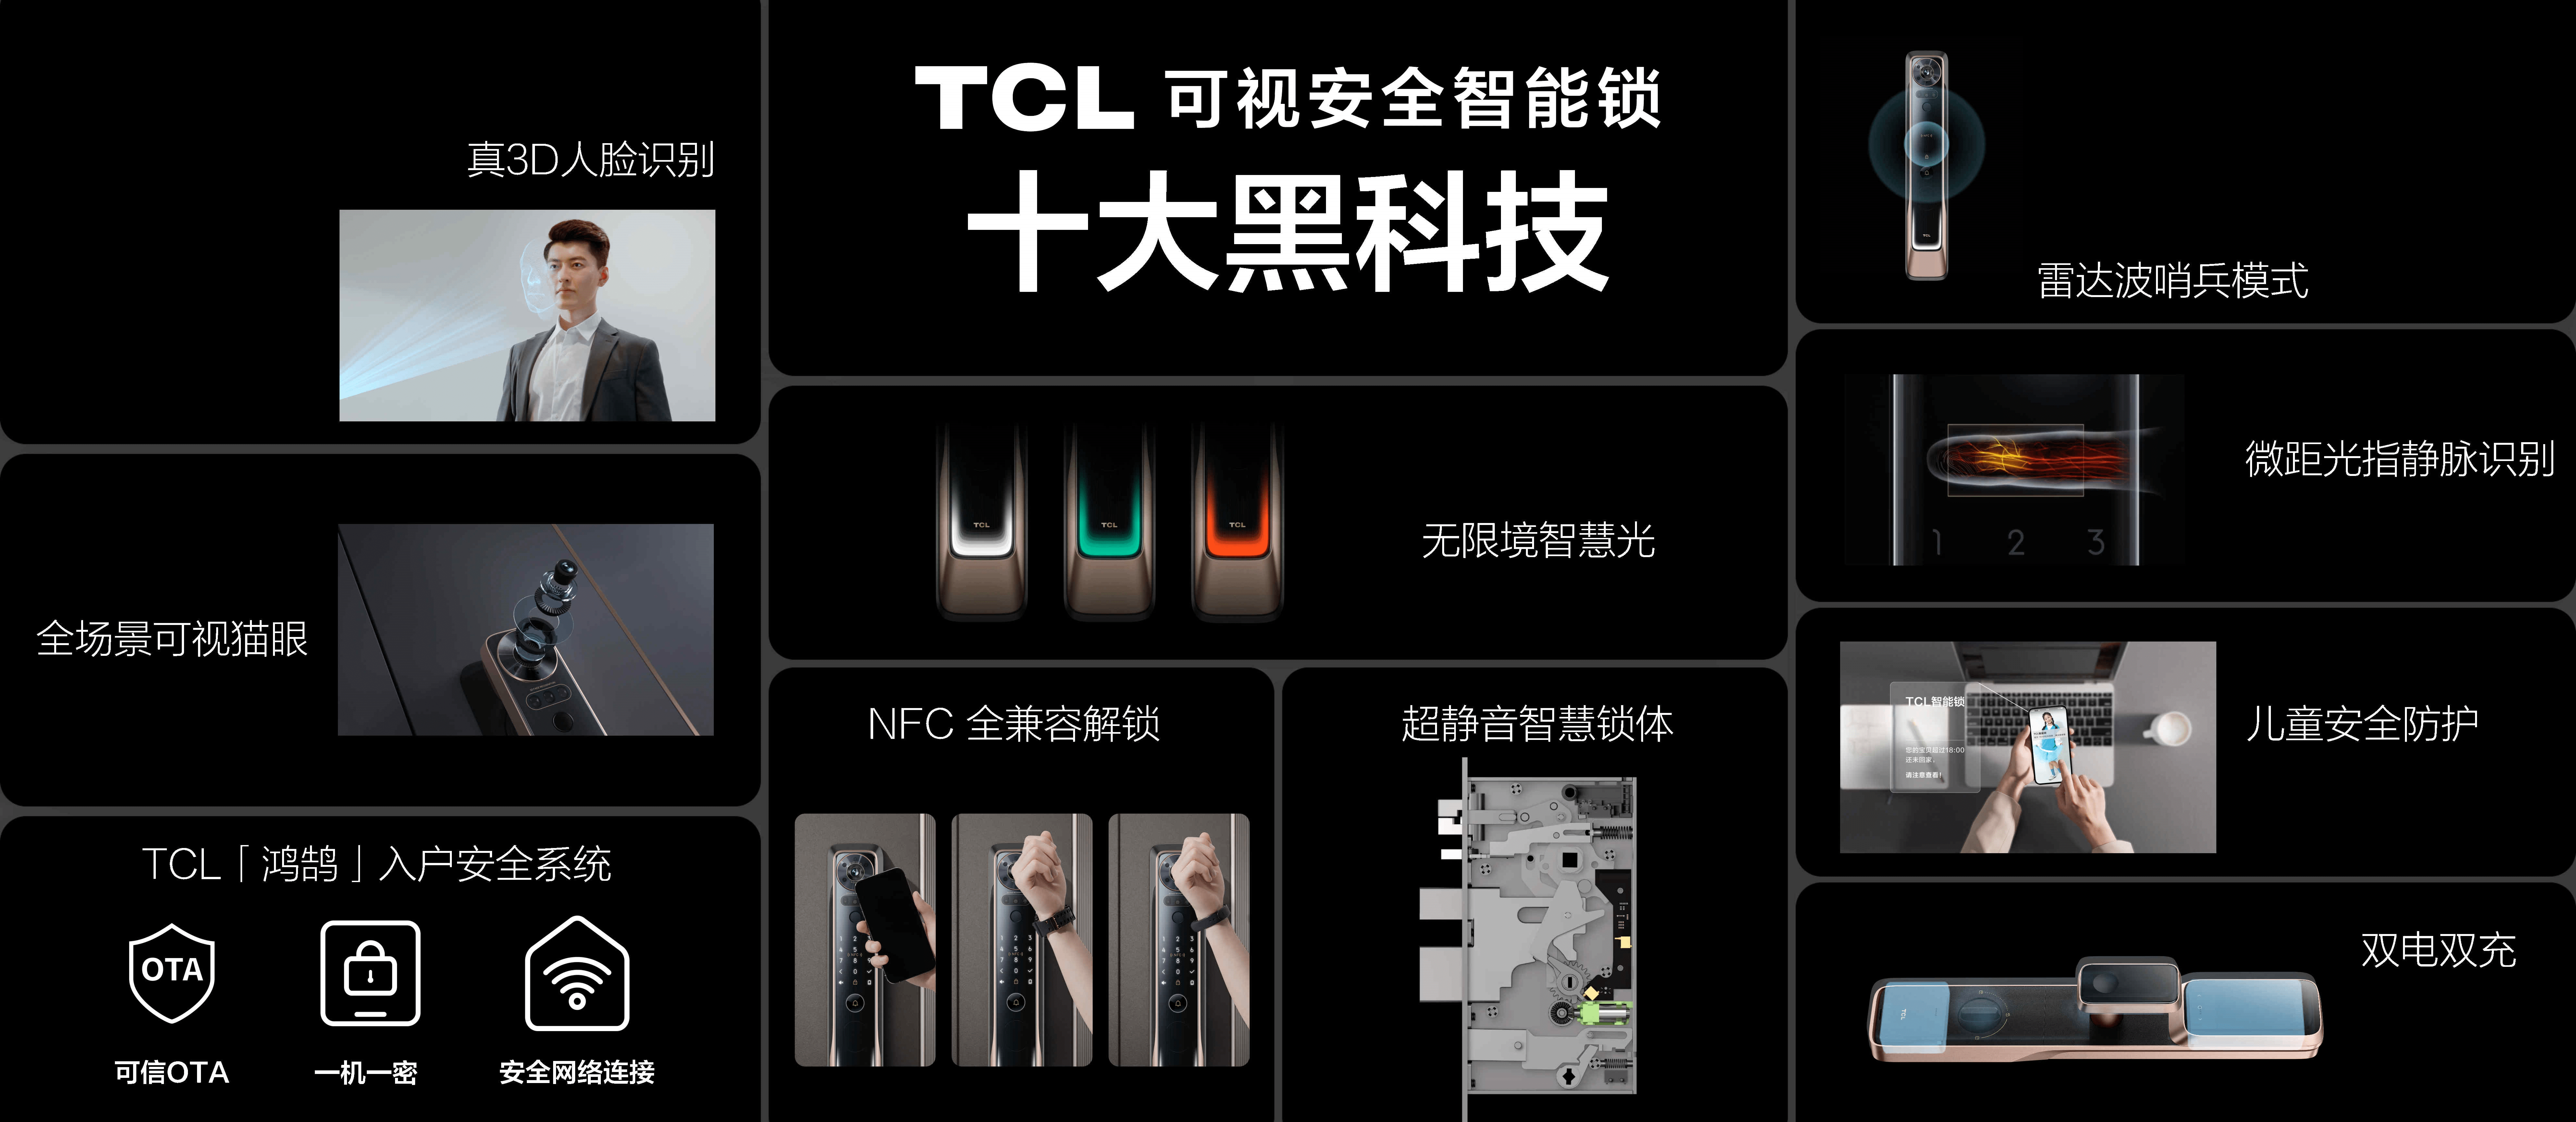 TCL智能锁春季新品发布十大黑科技让用户拥有“看得见的安全感”(图6)